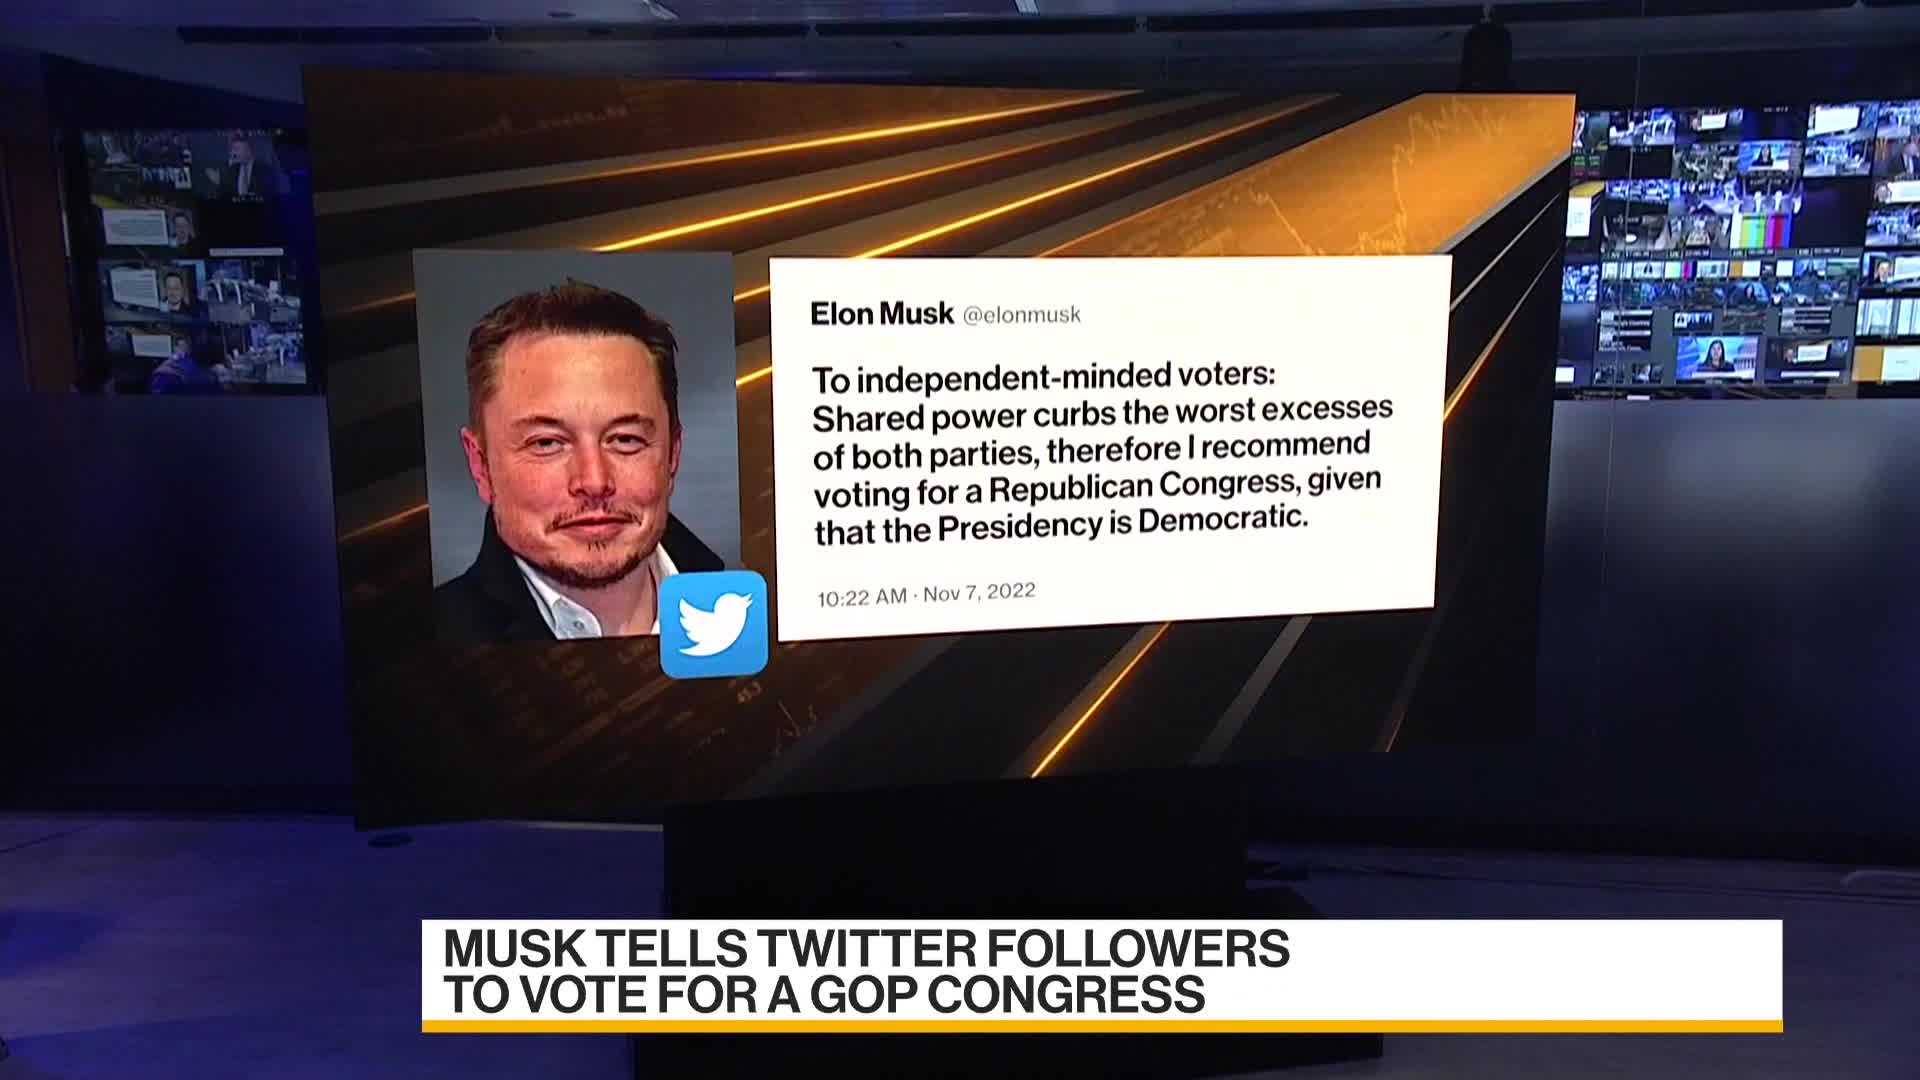 Watch Elon Musk Tells Twitter Followers to Vote for a GOP Congress